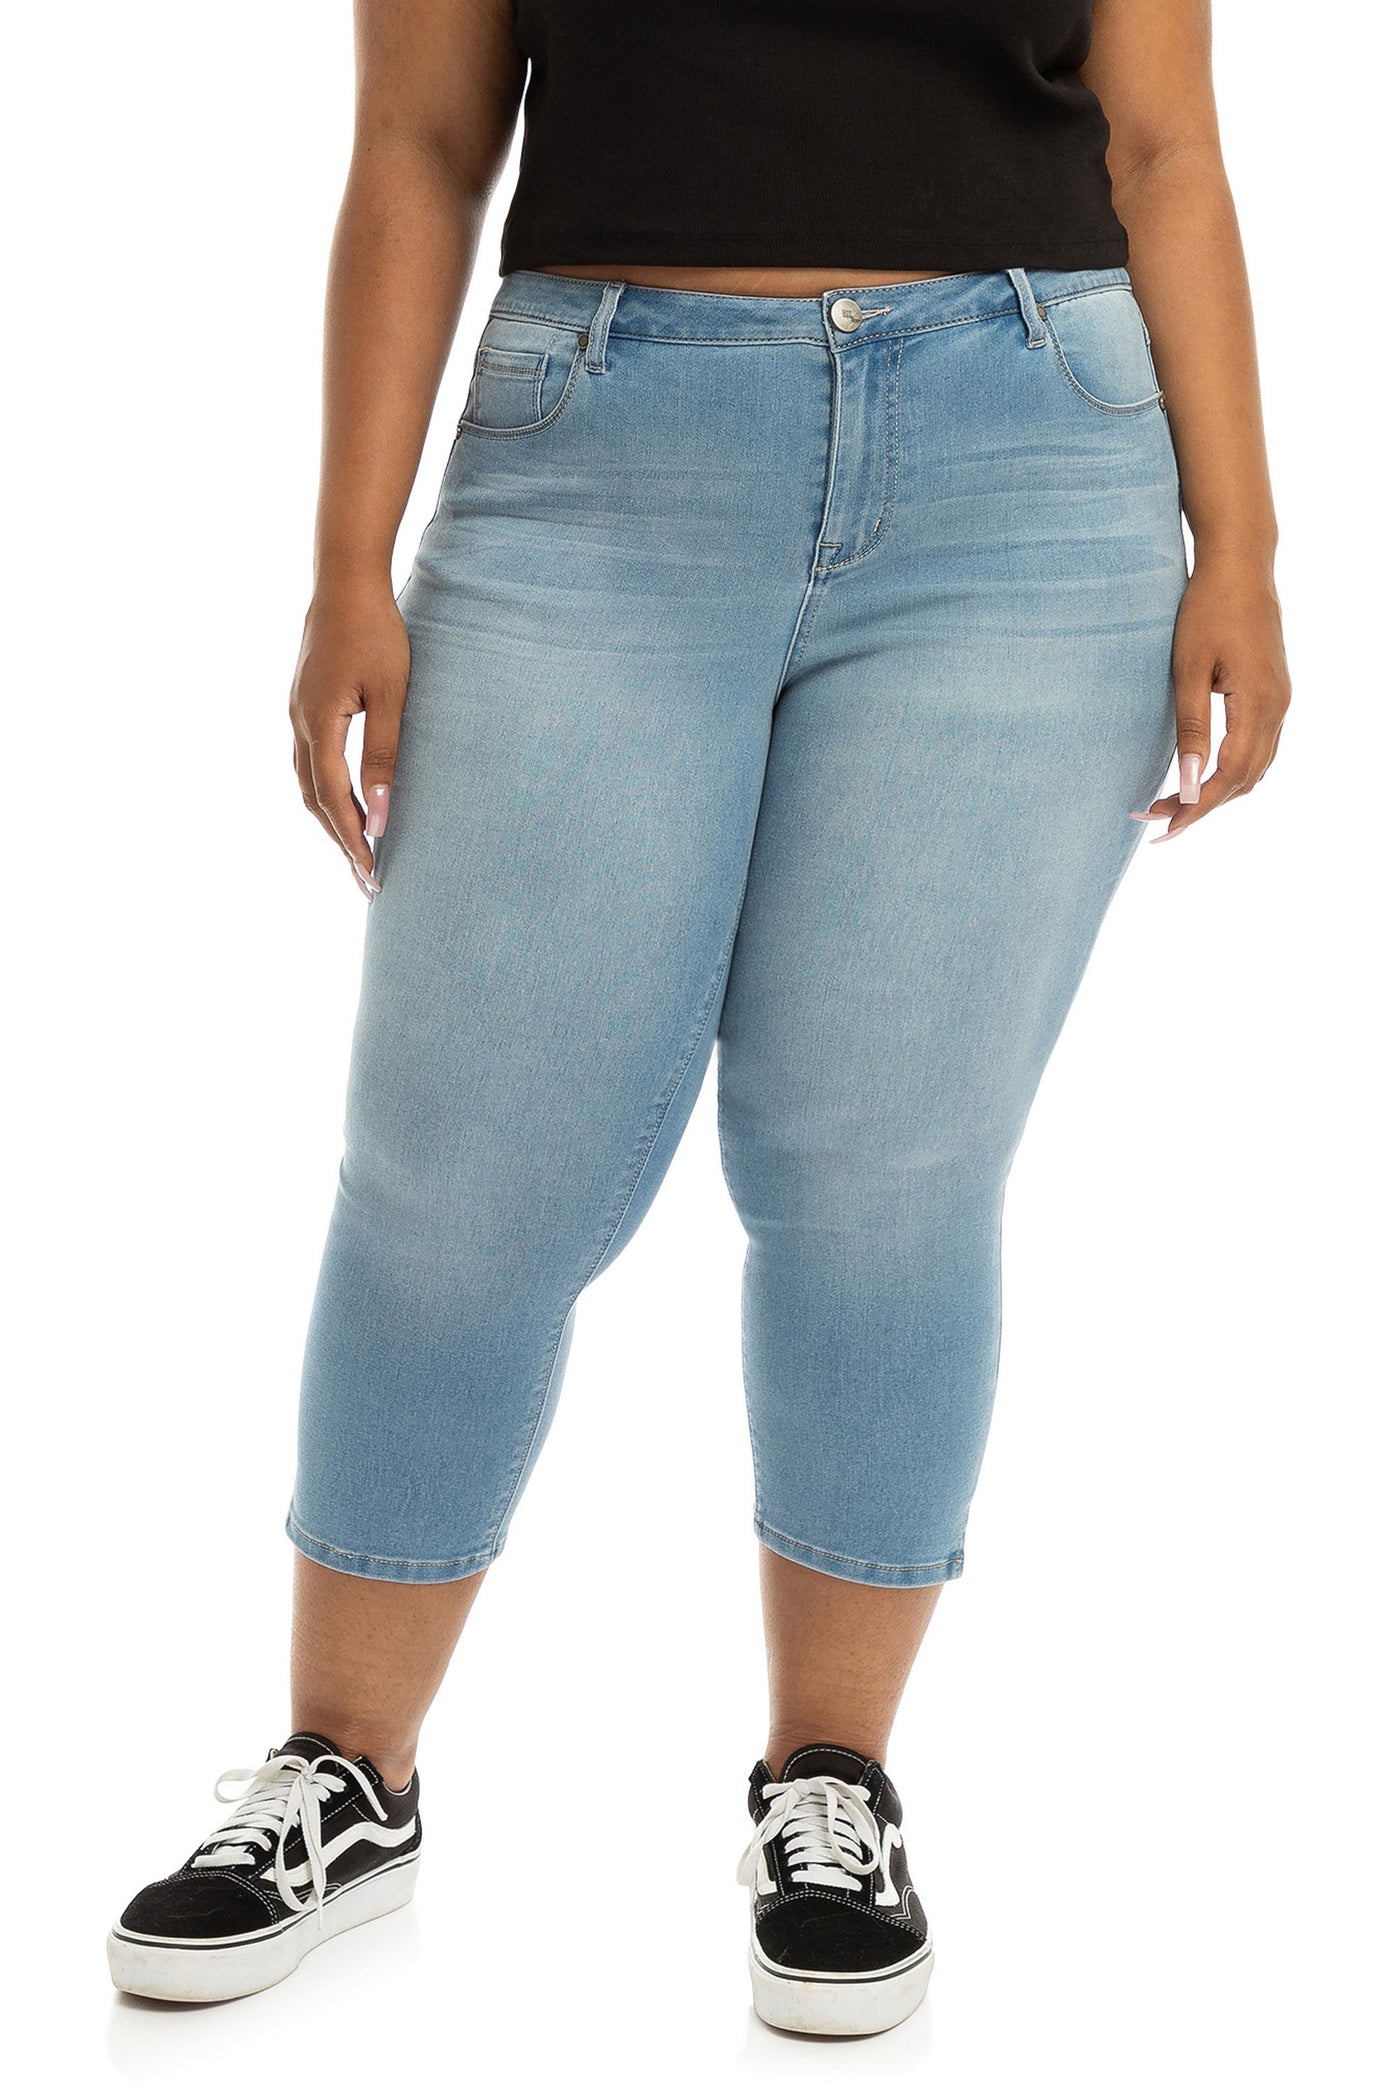 Paulo Due Womens Denim Slim Fit Capri Jeans High Waist 3/4 Length C